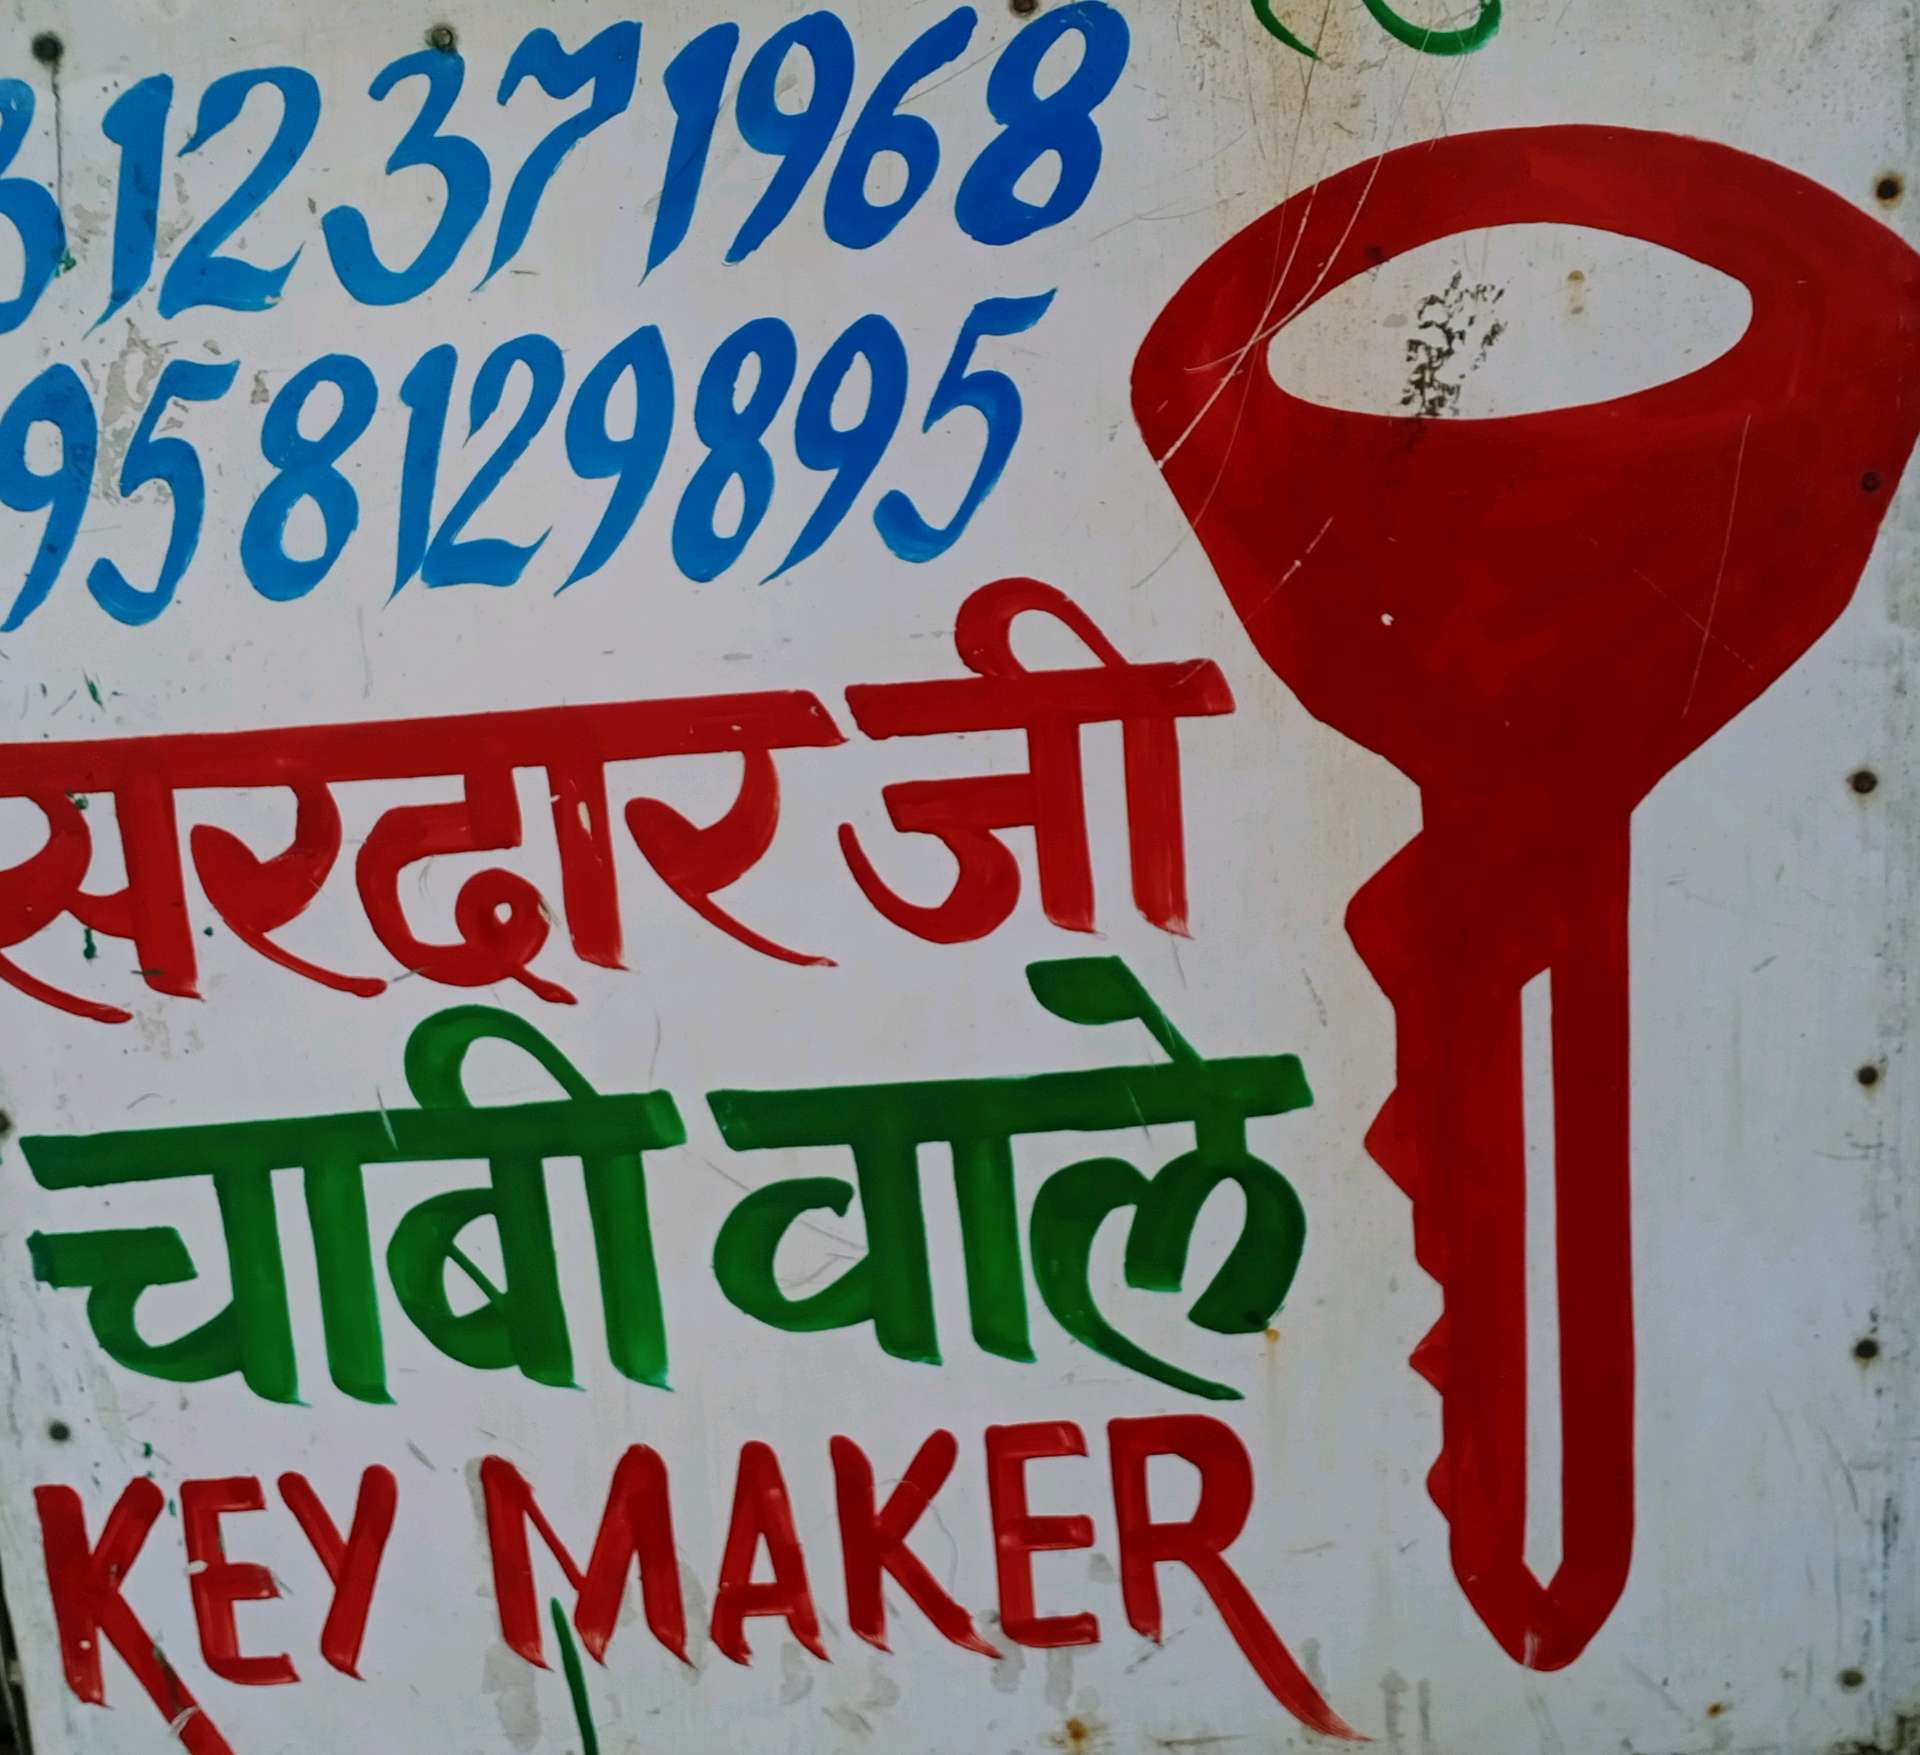 Sardar Key Maker Noida 7289999617 Near Me Key Maker Noida, Uttar Pradesh